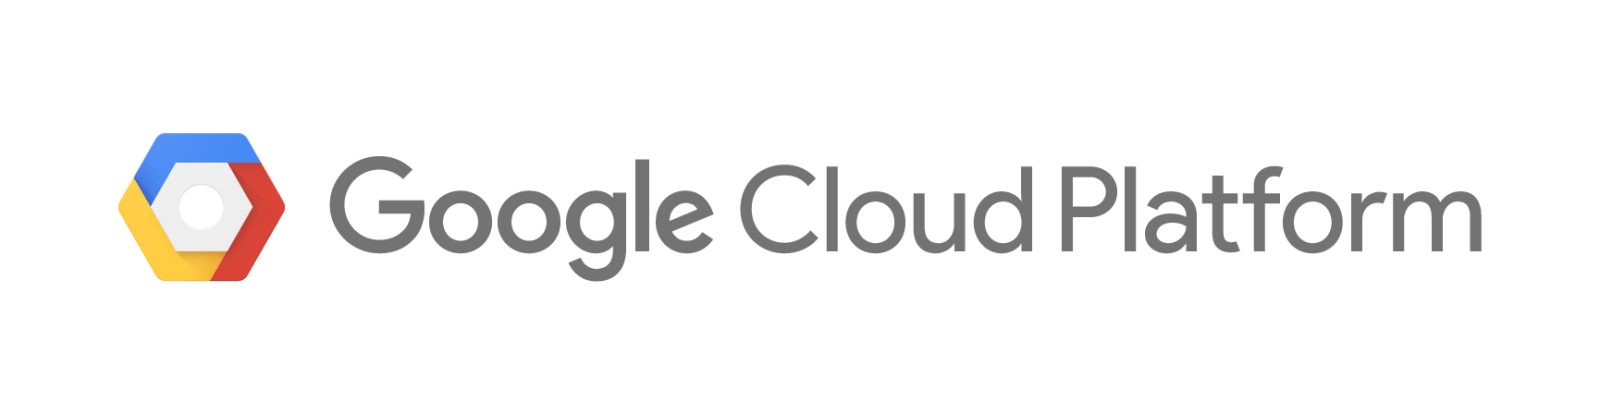 Google Cloud Platform Logo - Googlecloudplatform Logo (1) Cloud Premier Partner. G